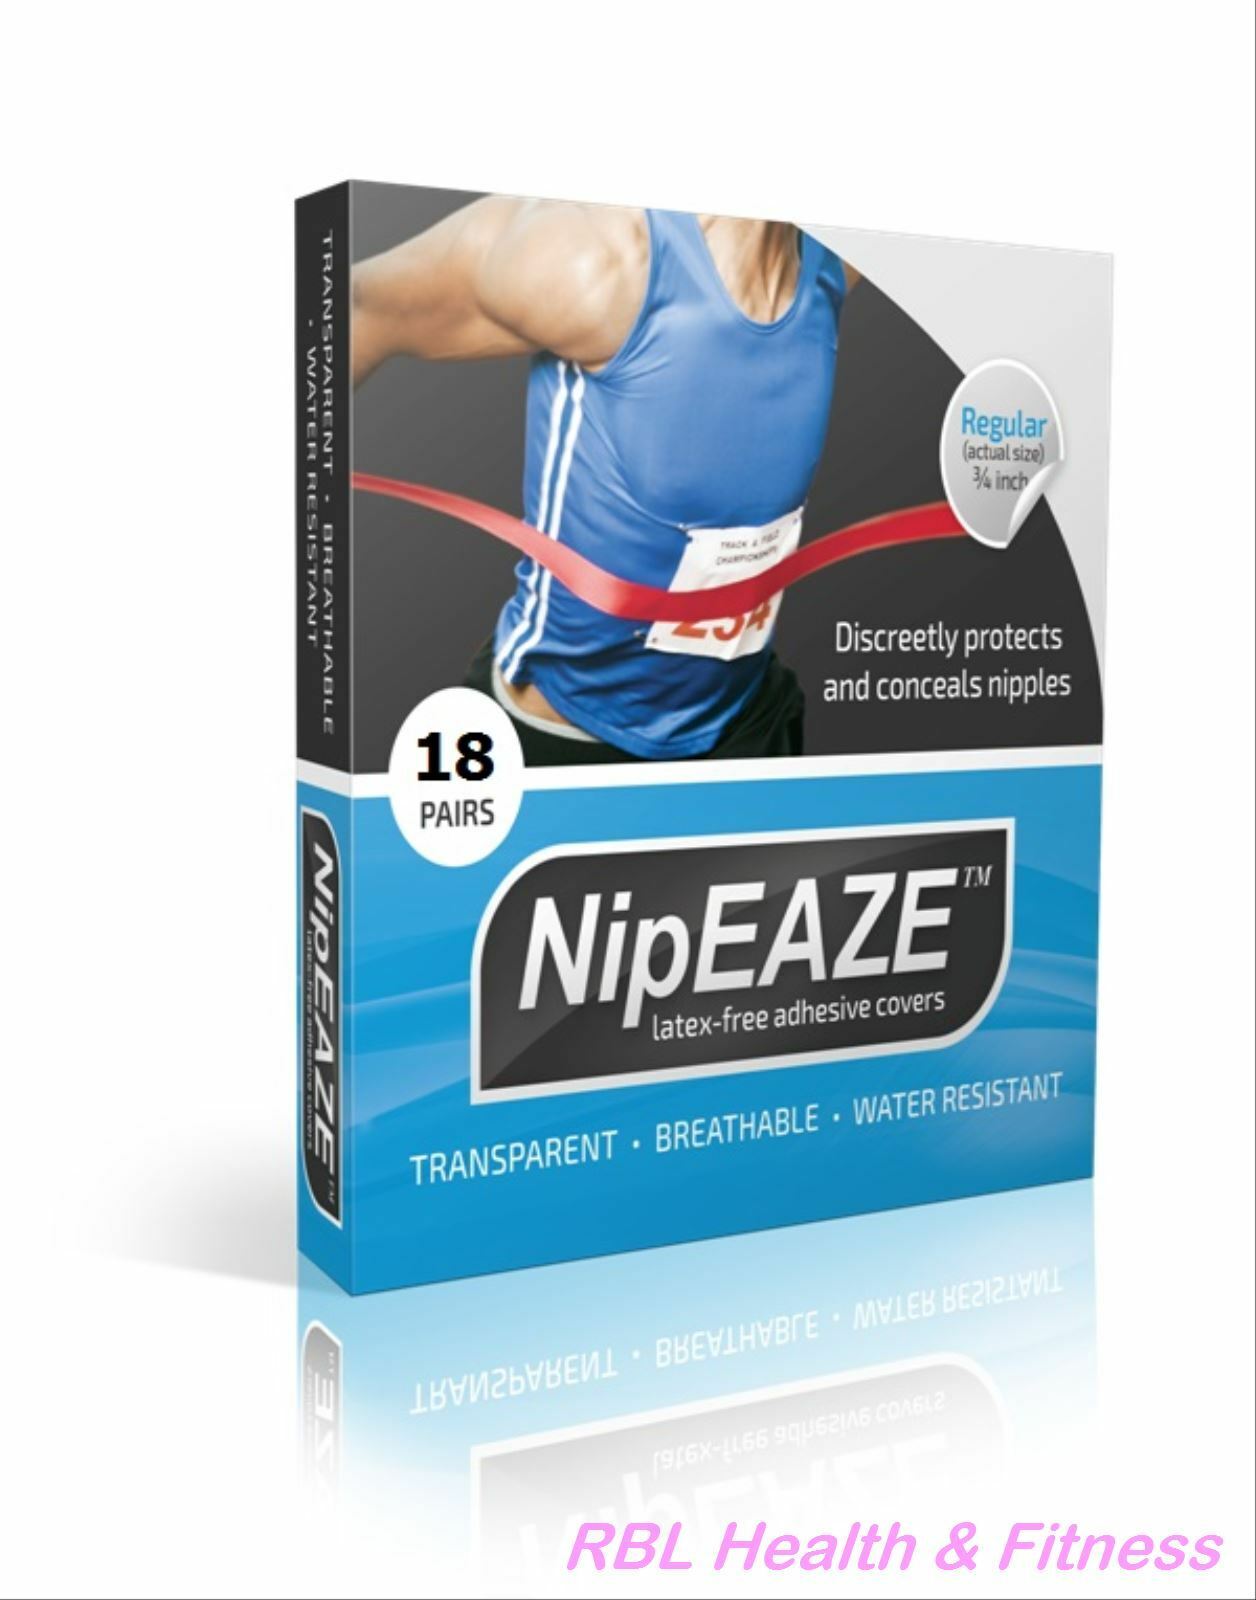 36-144pc Nipeaze Nipple Protectors Anti-chafing Runner Nip Cover-men's 3/4" Size